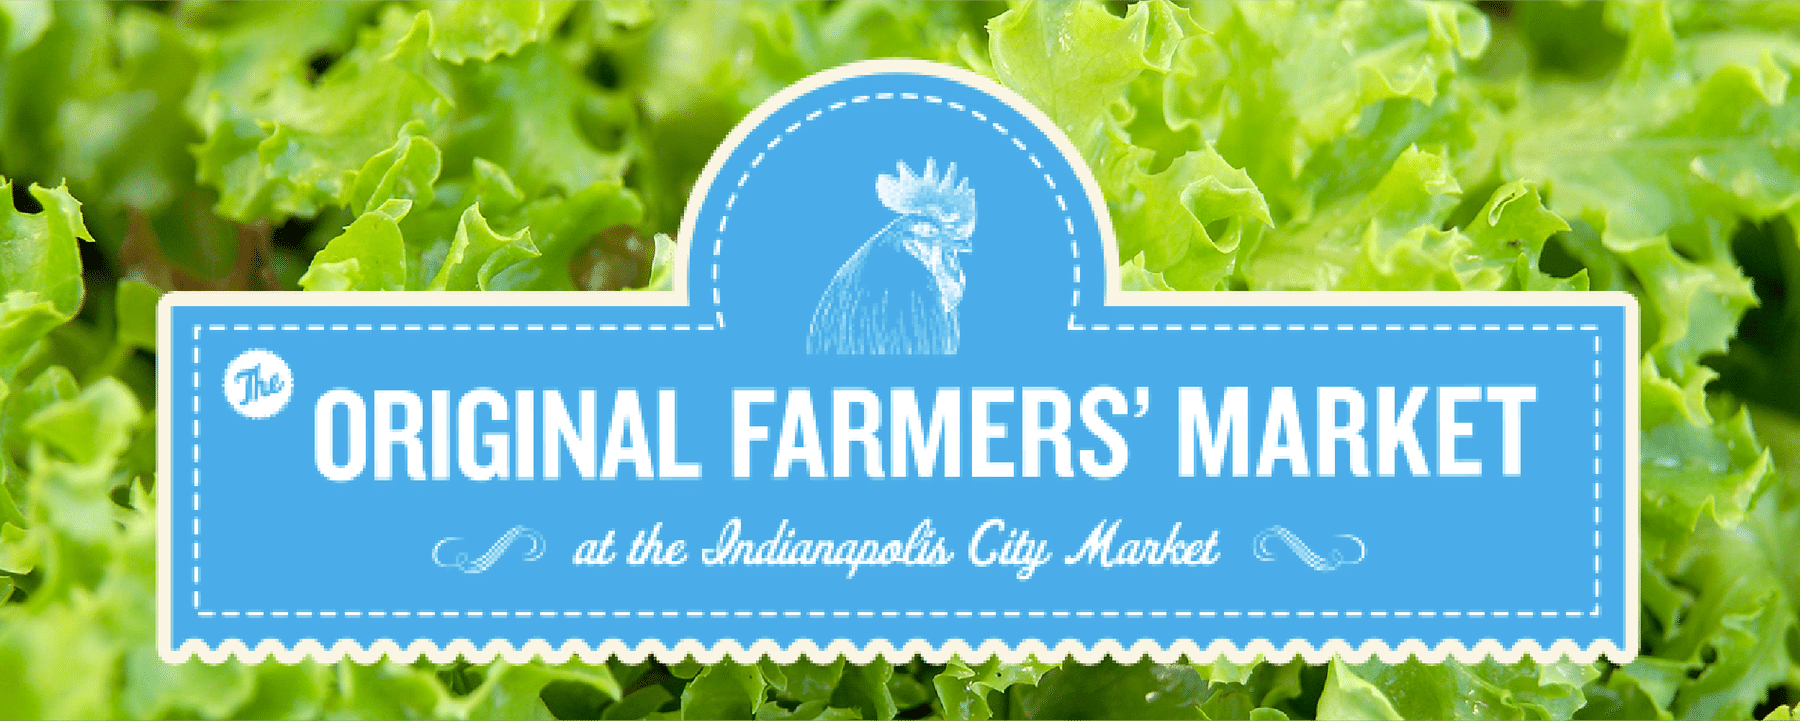 Indianapolis Farmers Market